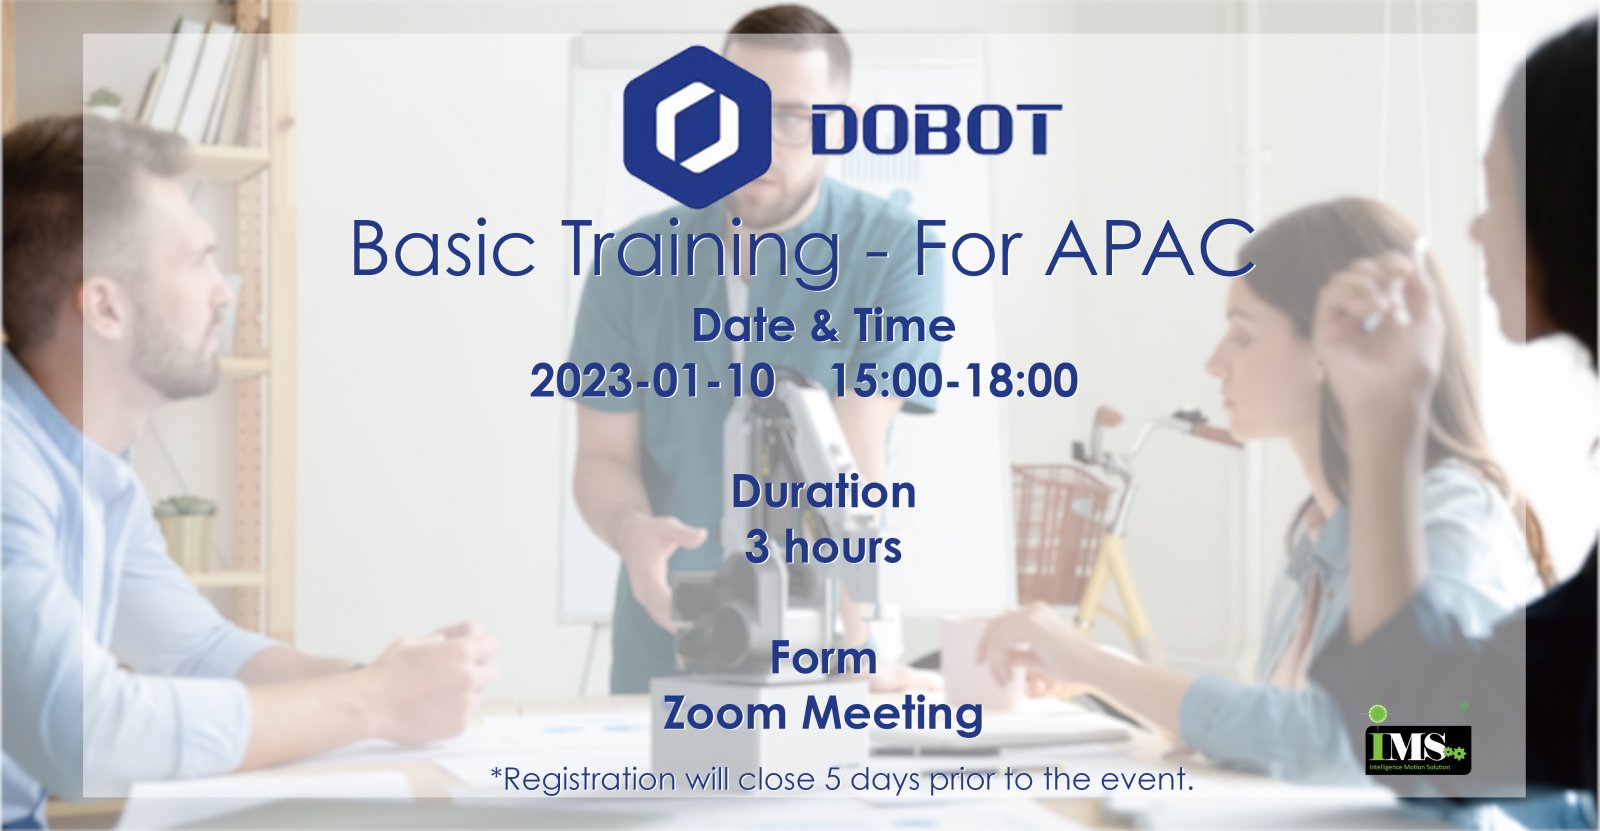 Dobot | Basic Training - For APAC